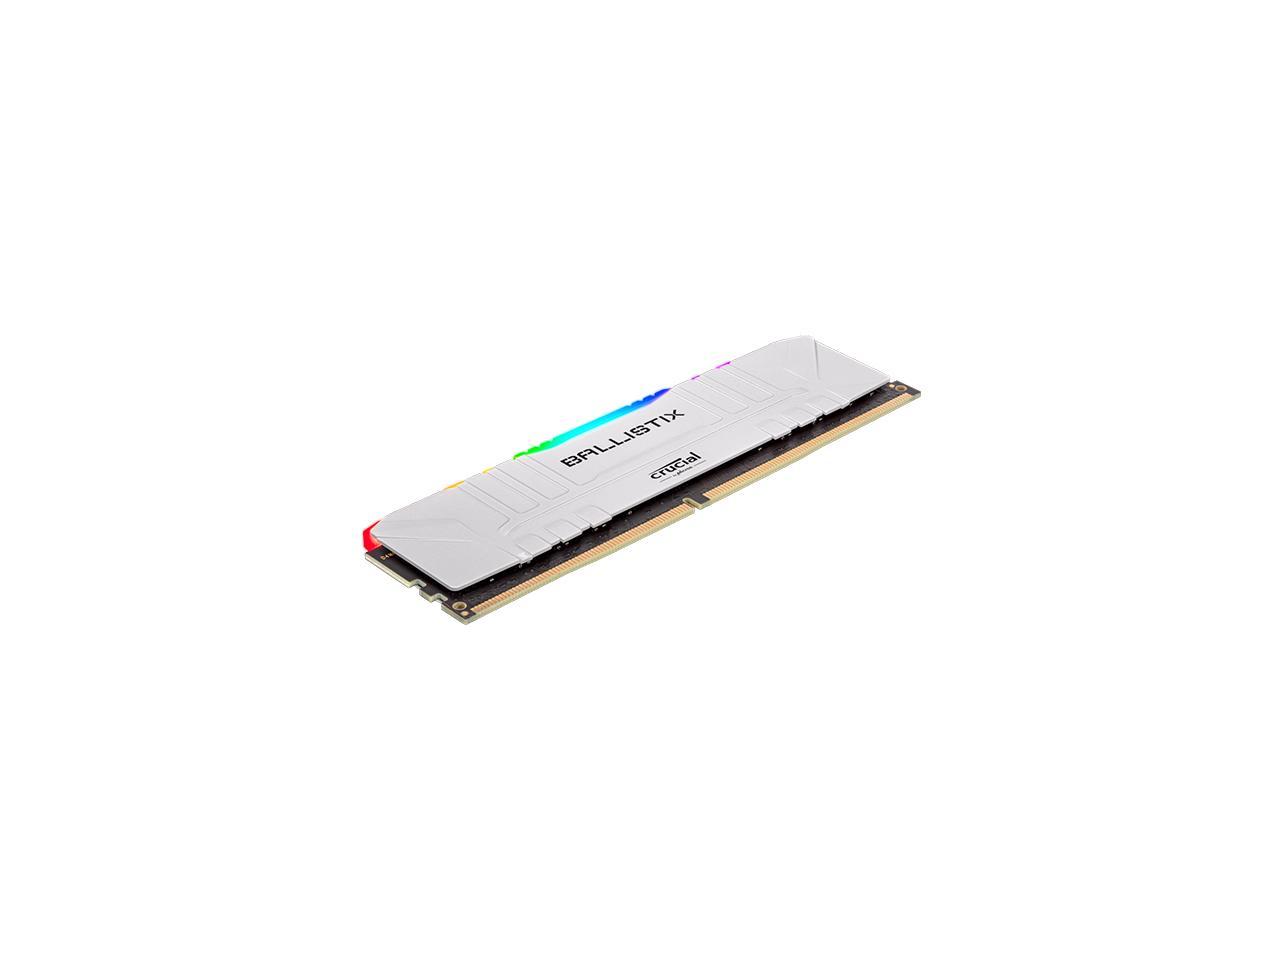 Crucial Ballistix RGB 32GB (2 x 16GB) 288-Pin DDR4 SDRAM DDR4 3000 (PC4 24000) Desktop Memory Model BL2K16G30C15U4WL